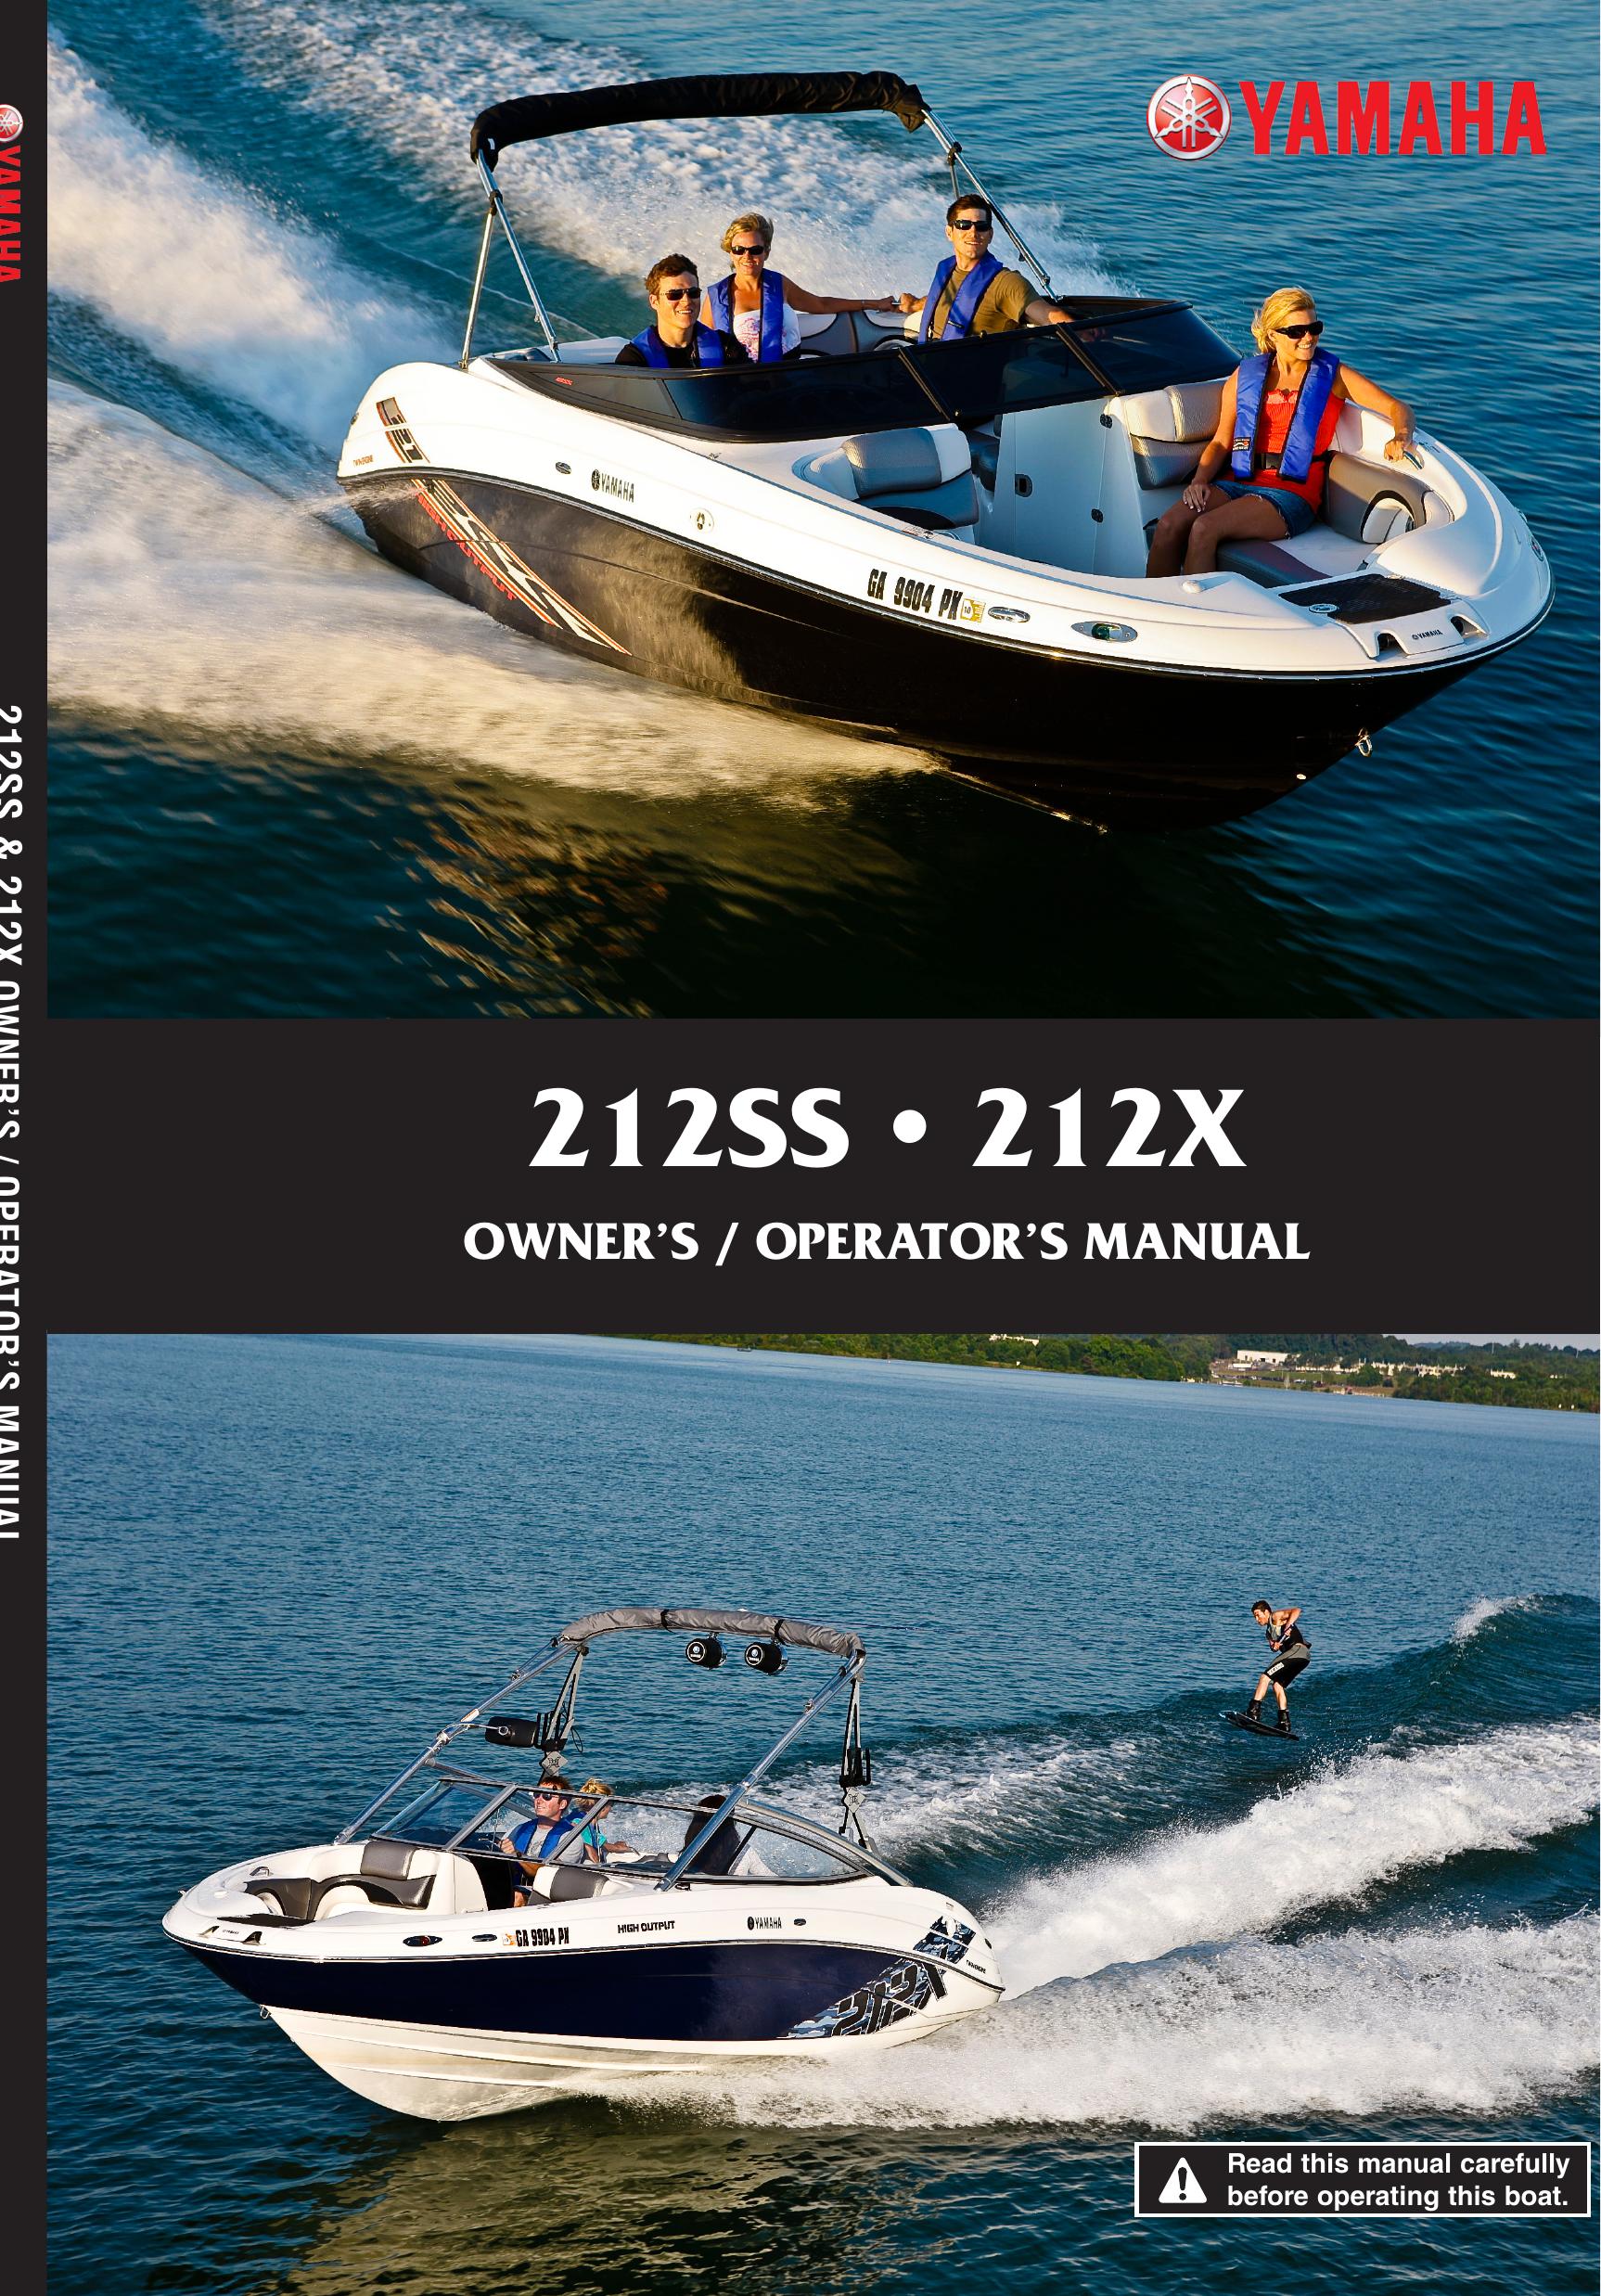 Yamaha 212SS Boat User Manual